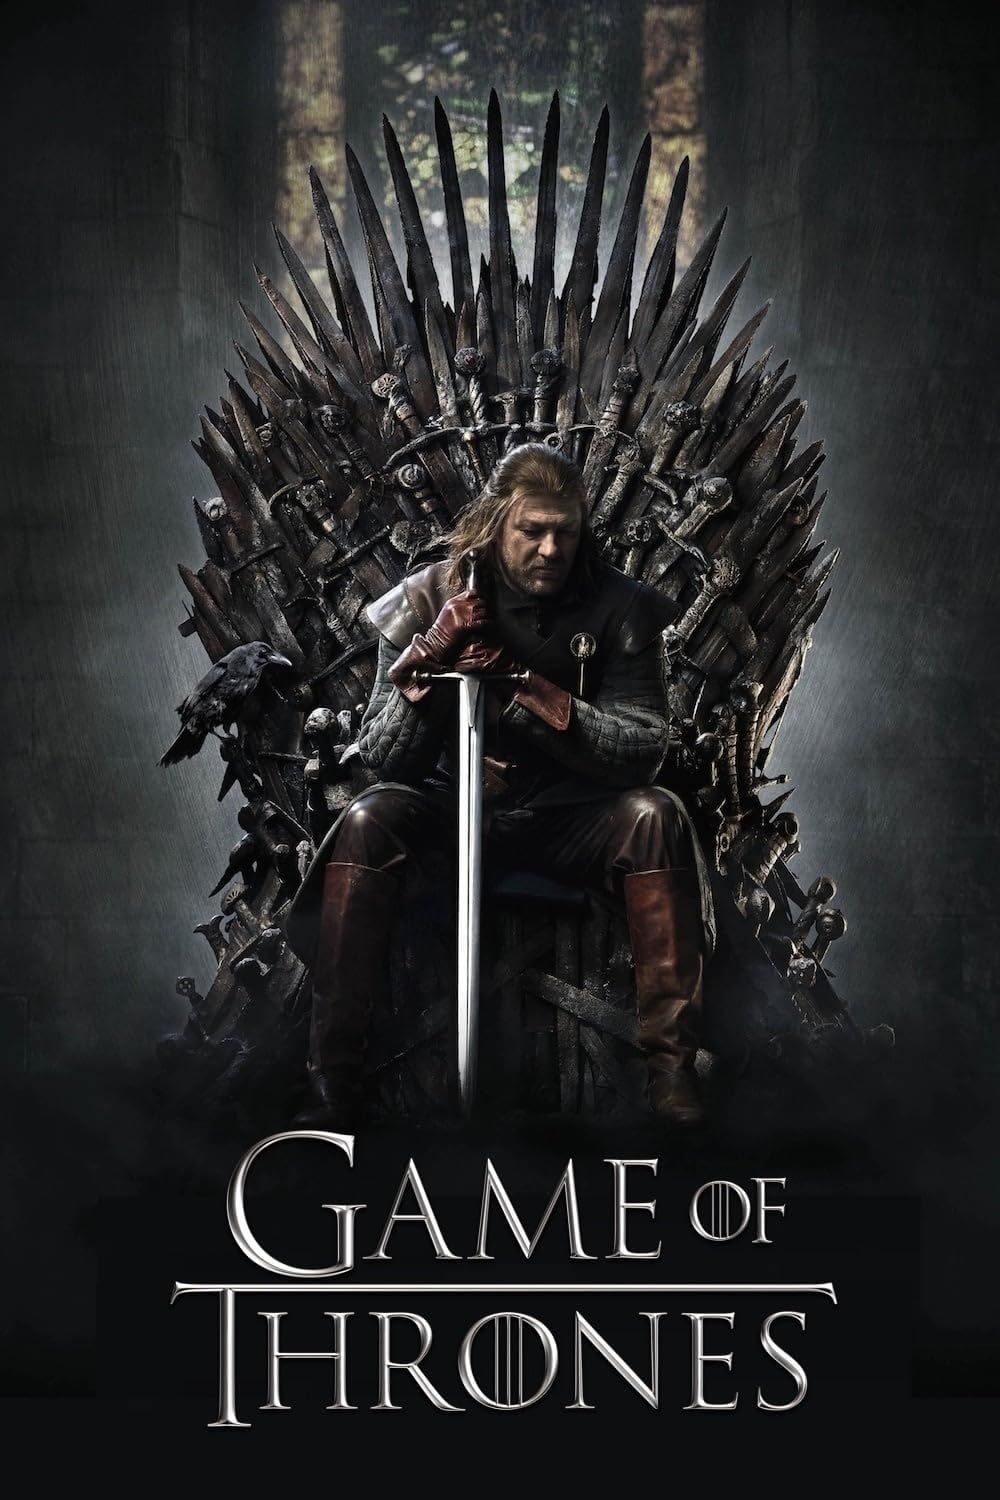 Game of Thrones (Season 4) Hindi Dubbed HBO Series HDRip 720p 480p